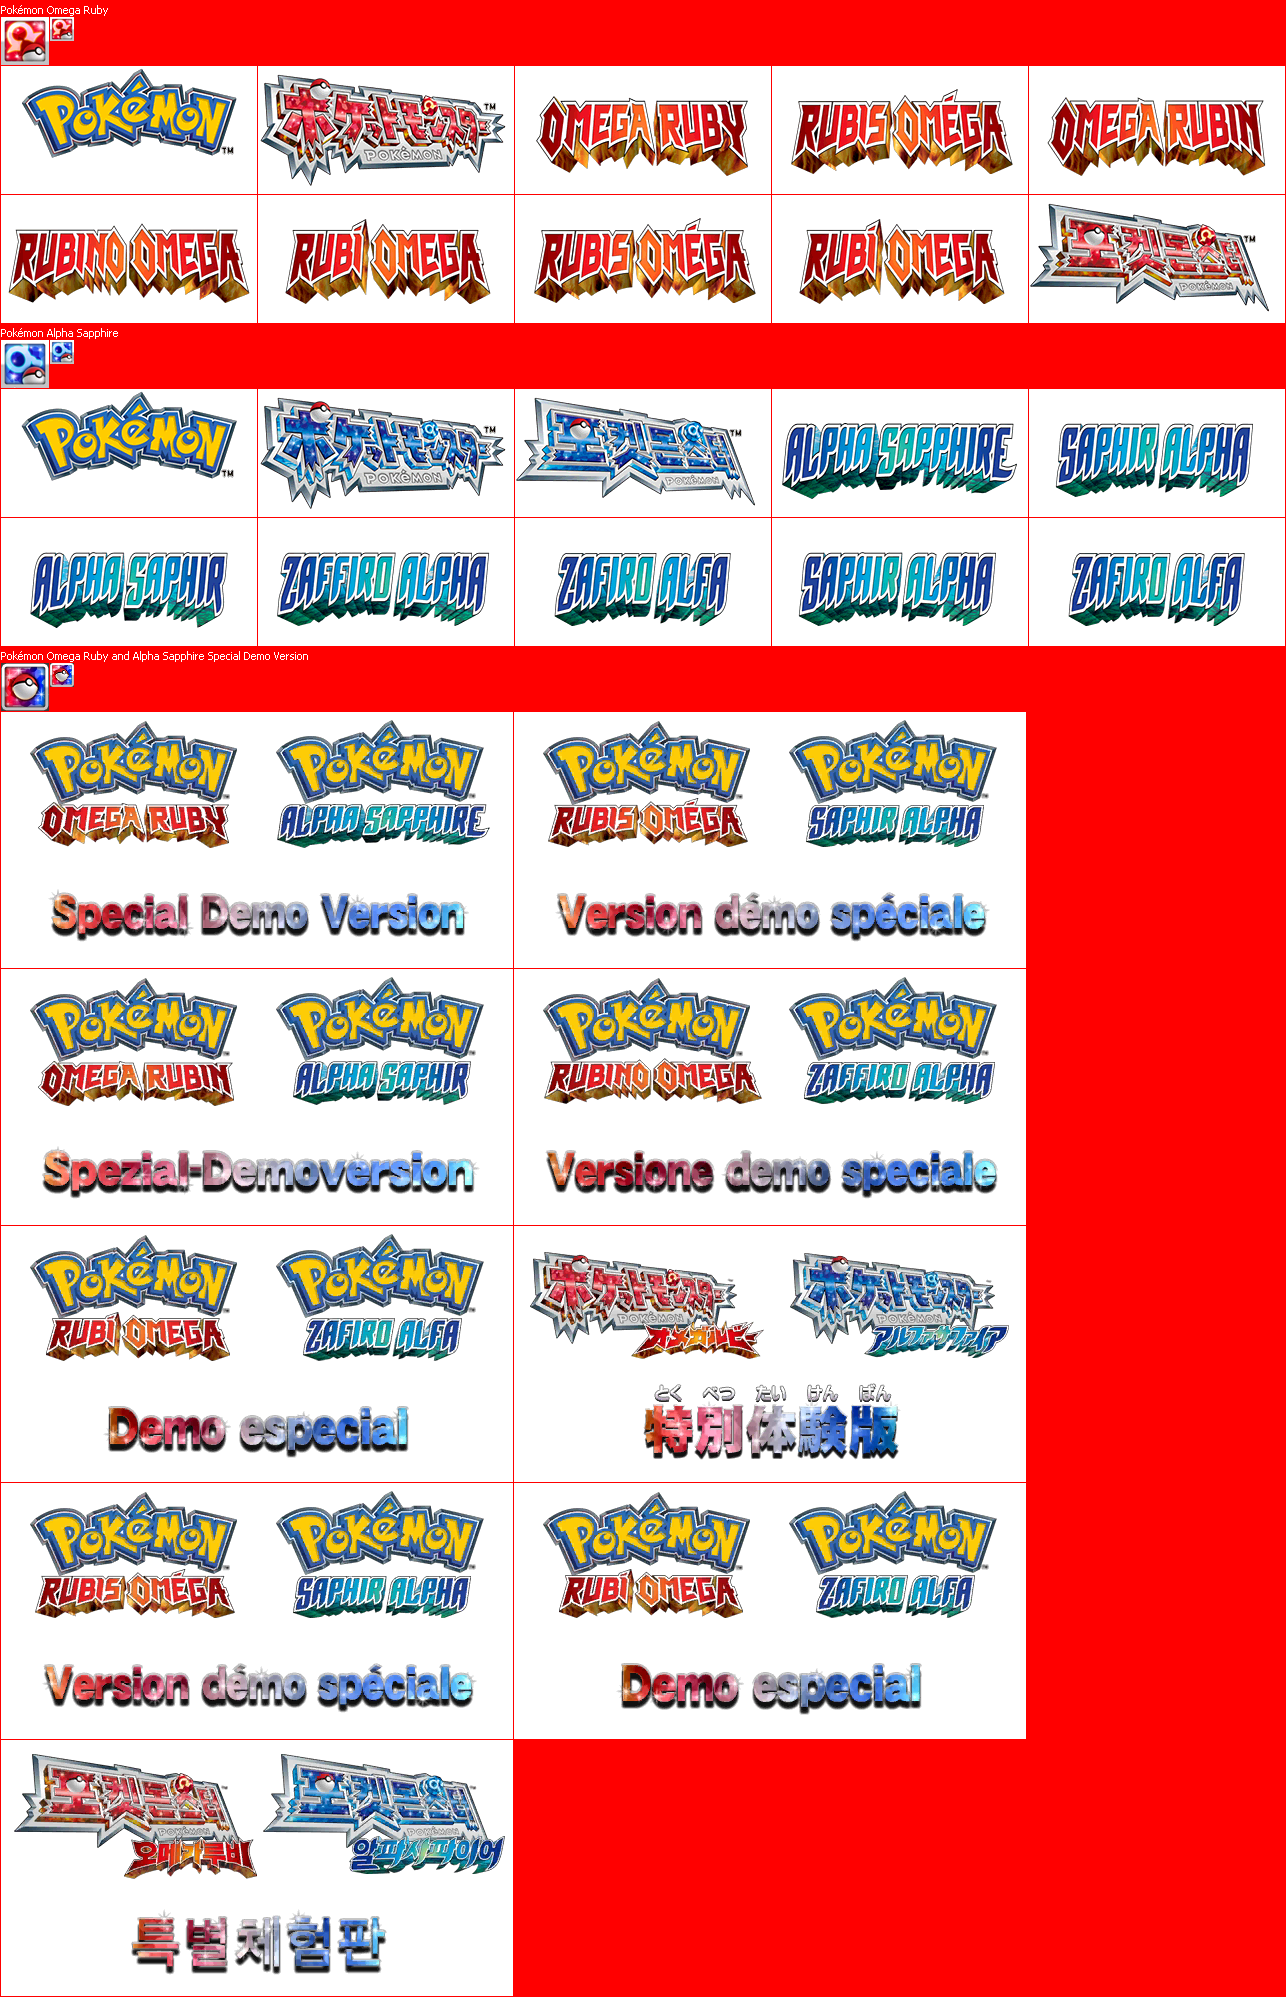 Pokémon Omega Ruby / Alpha Sapphire - HOME Menu Icons and Banners